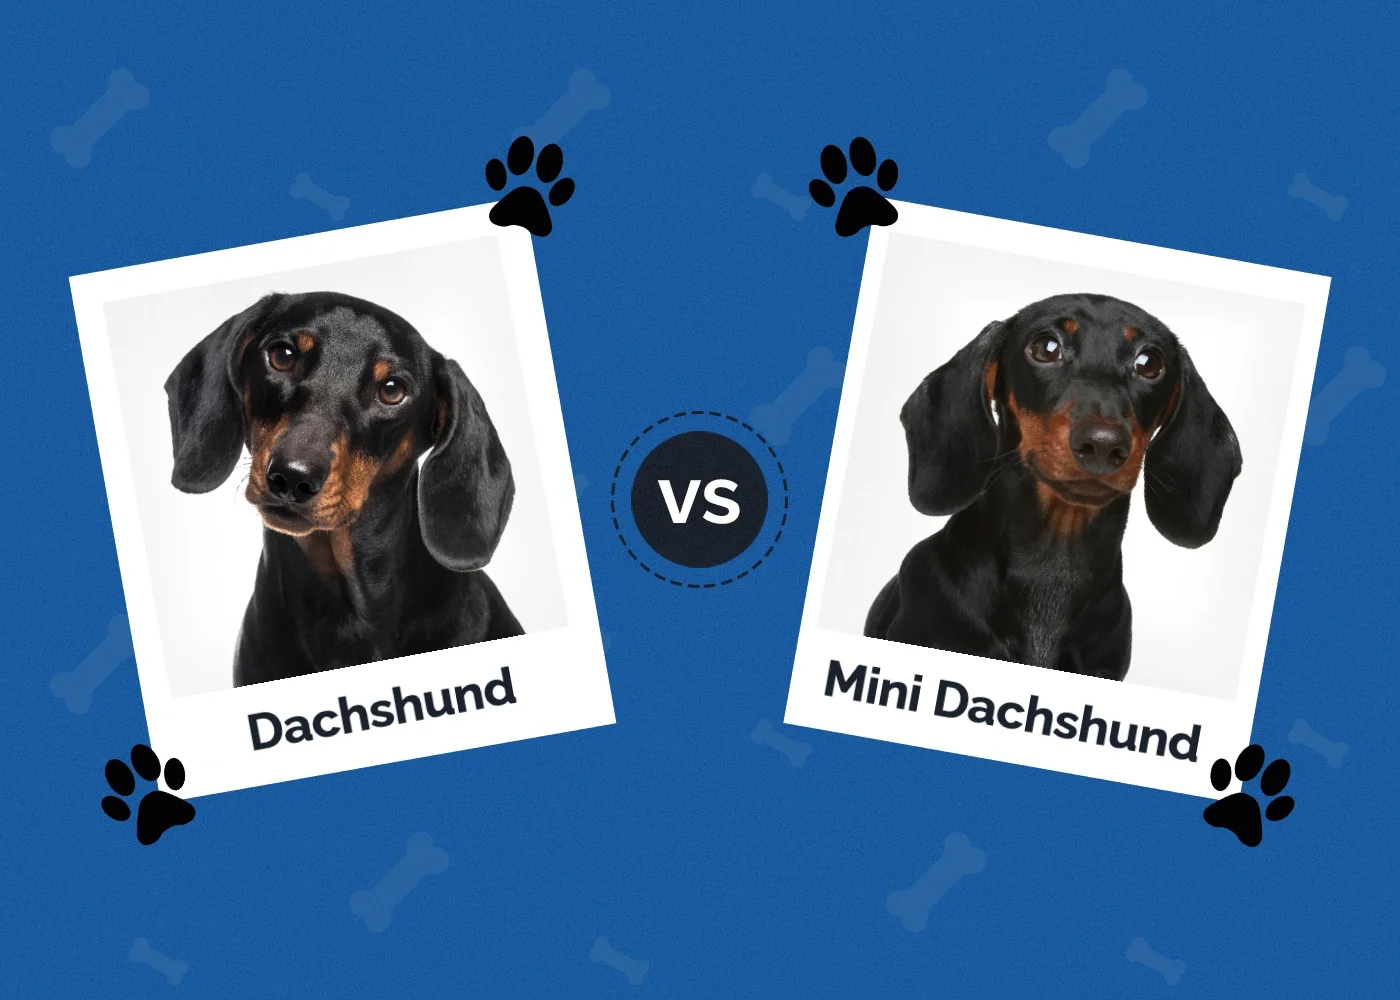 Dachshund vs Mini Dachshund - Featured Image